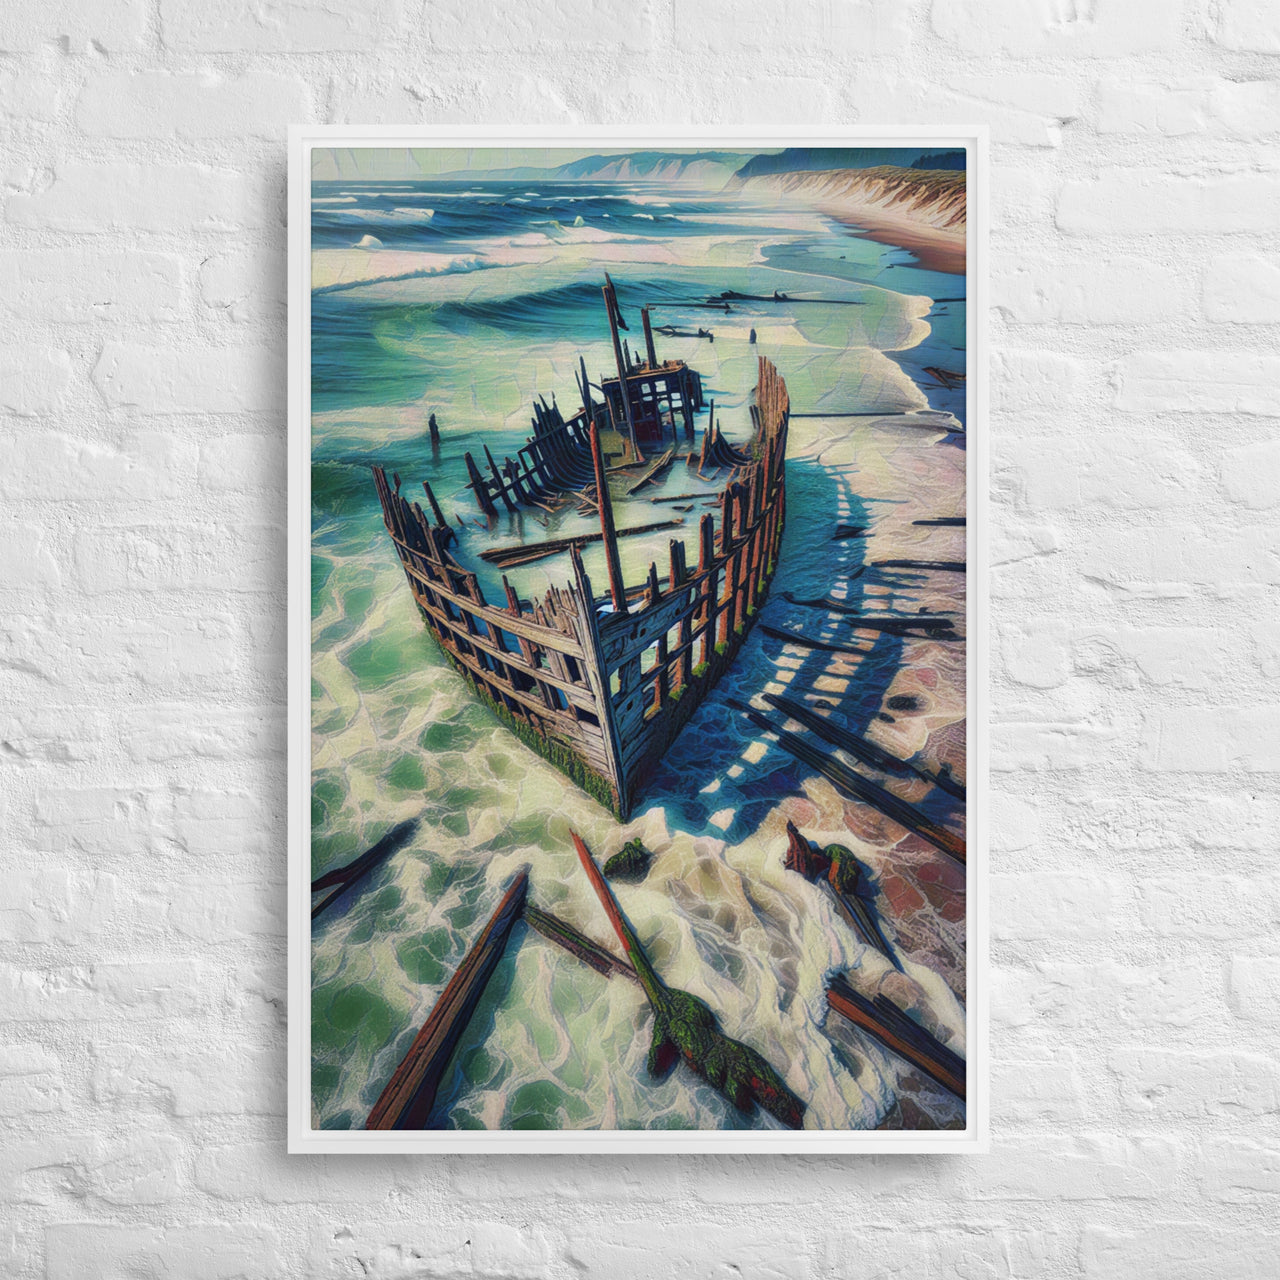 Ship Wreck on the Oregon Coast - Digital Art - Framed canvas - FREE SHIPPING